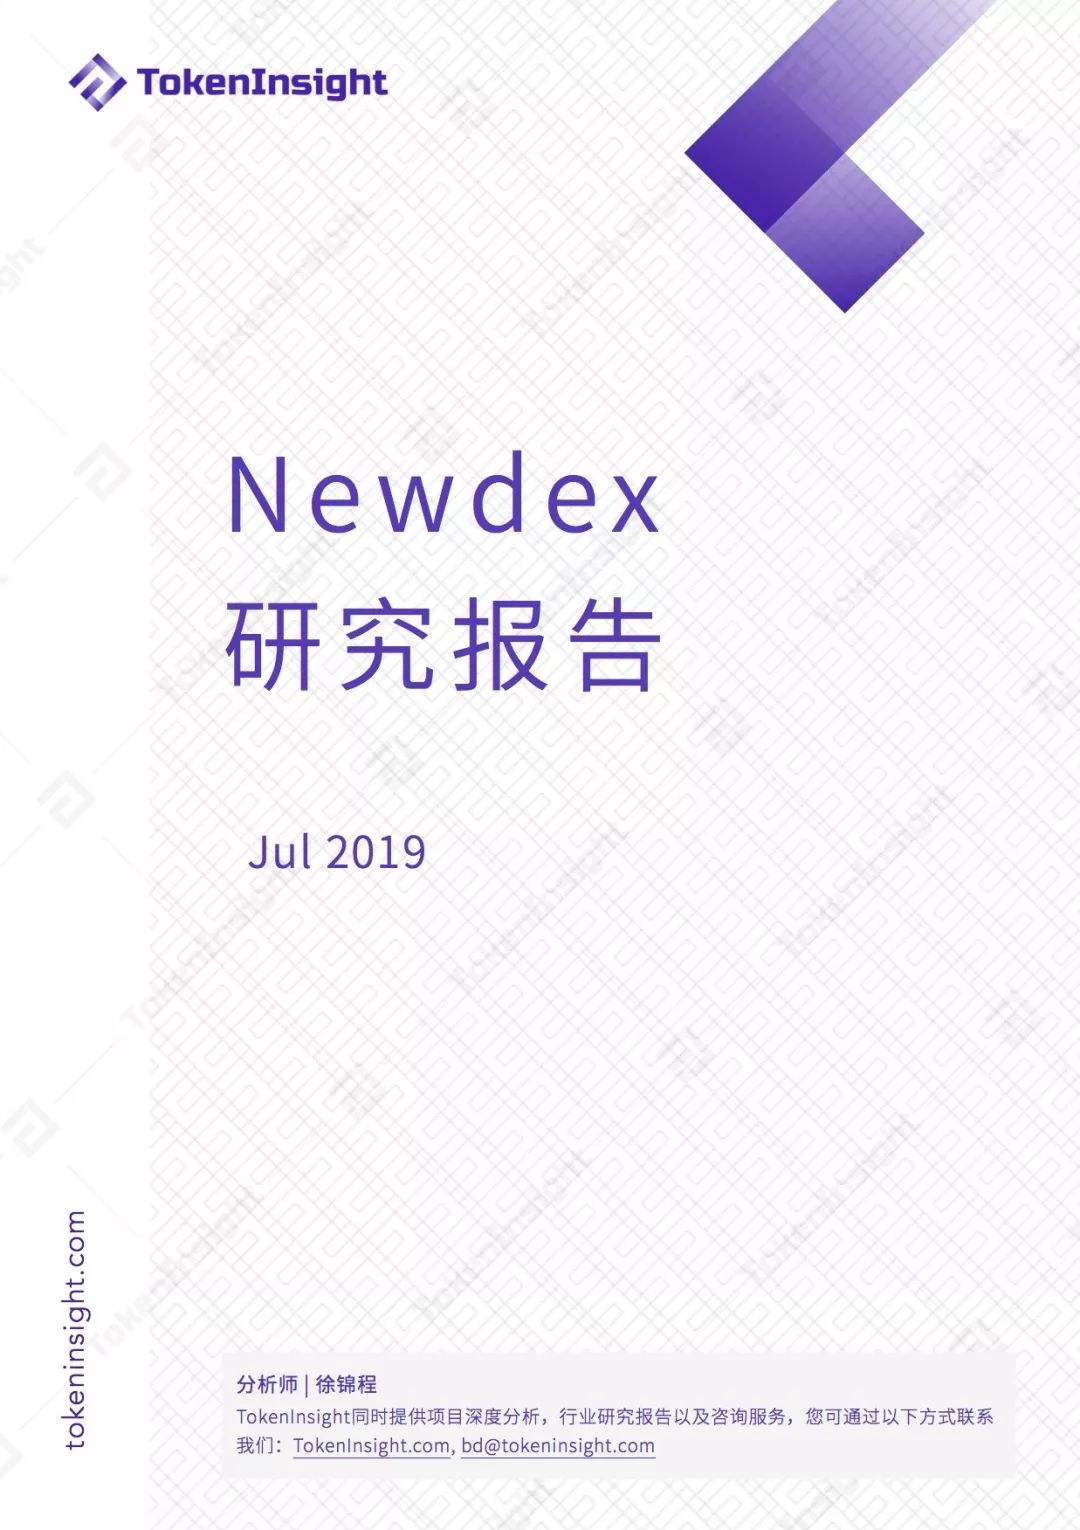 Newdex 研究报告 | TokenInsight配图(1)